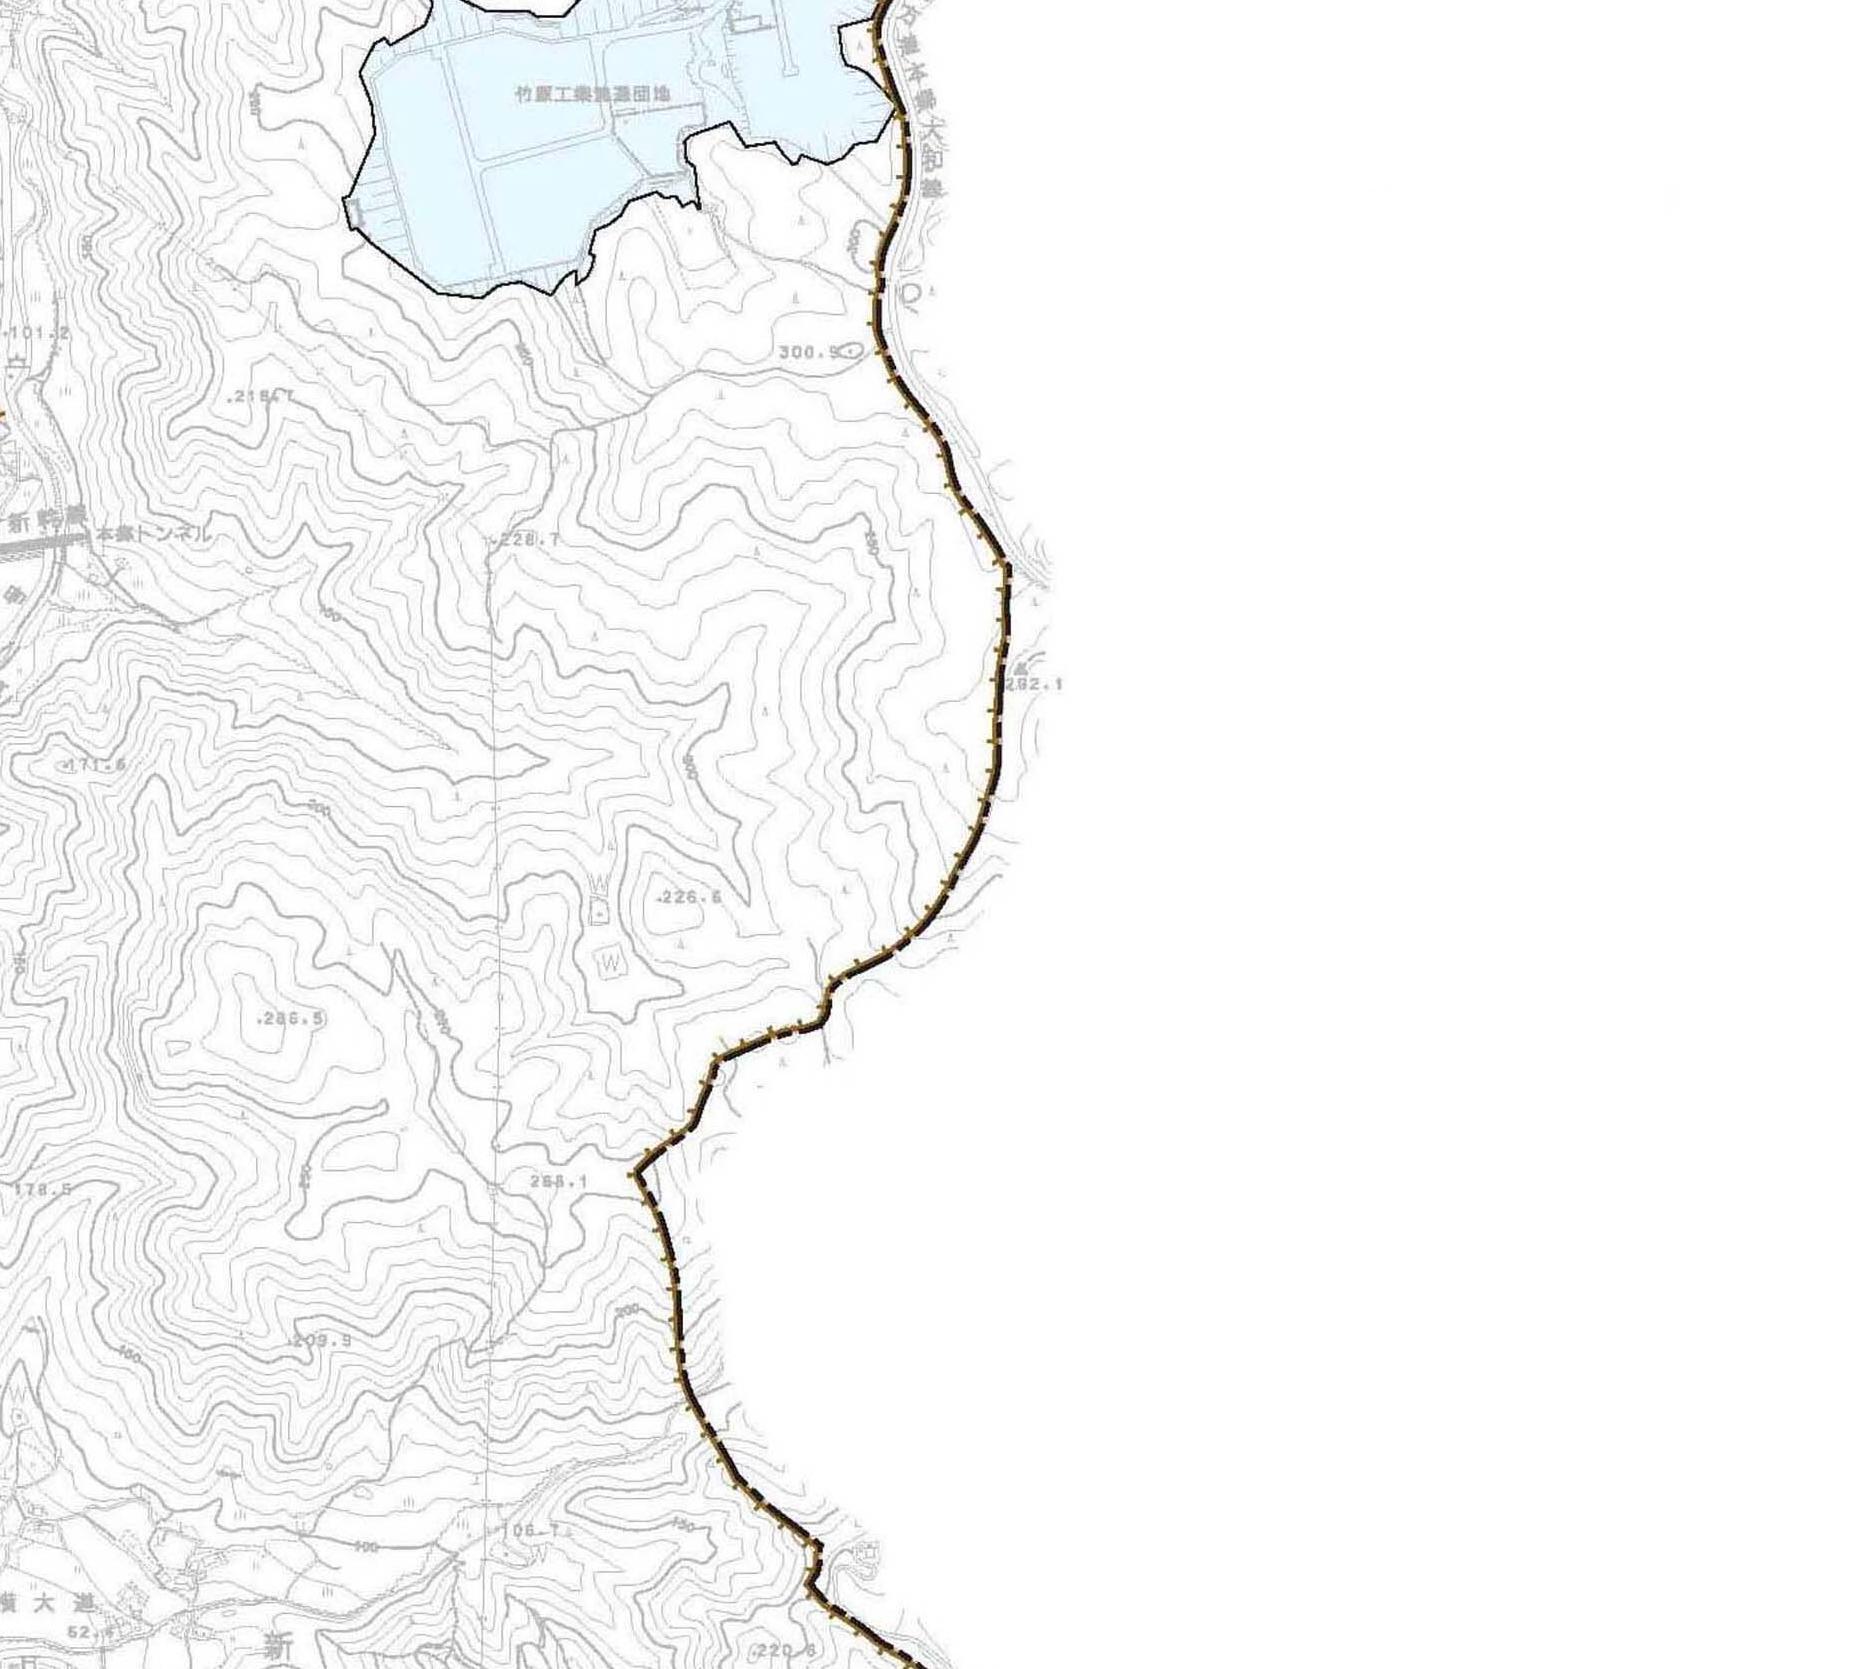 都市計画図f02の地図画像